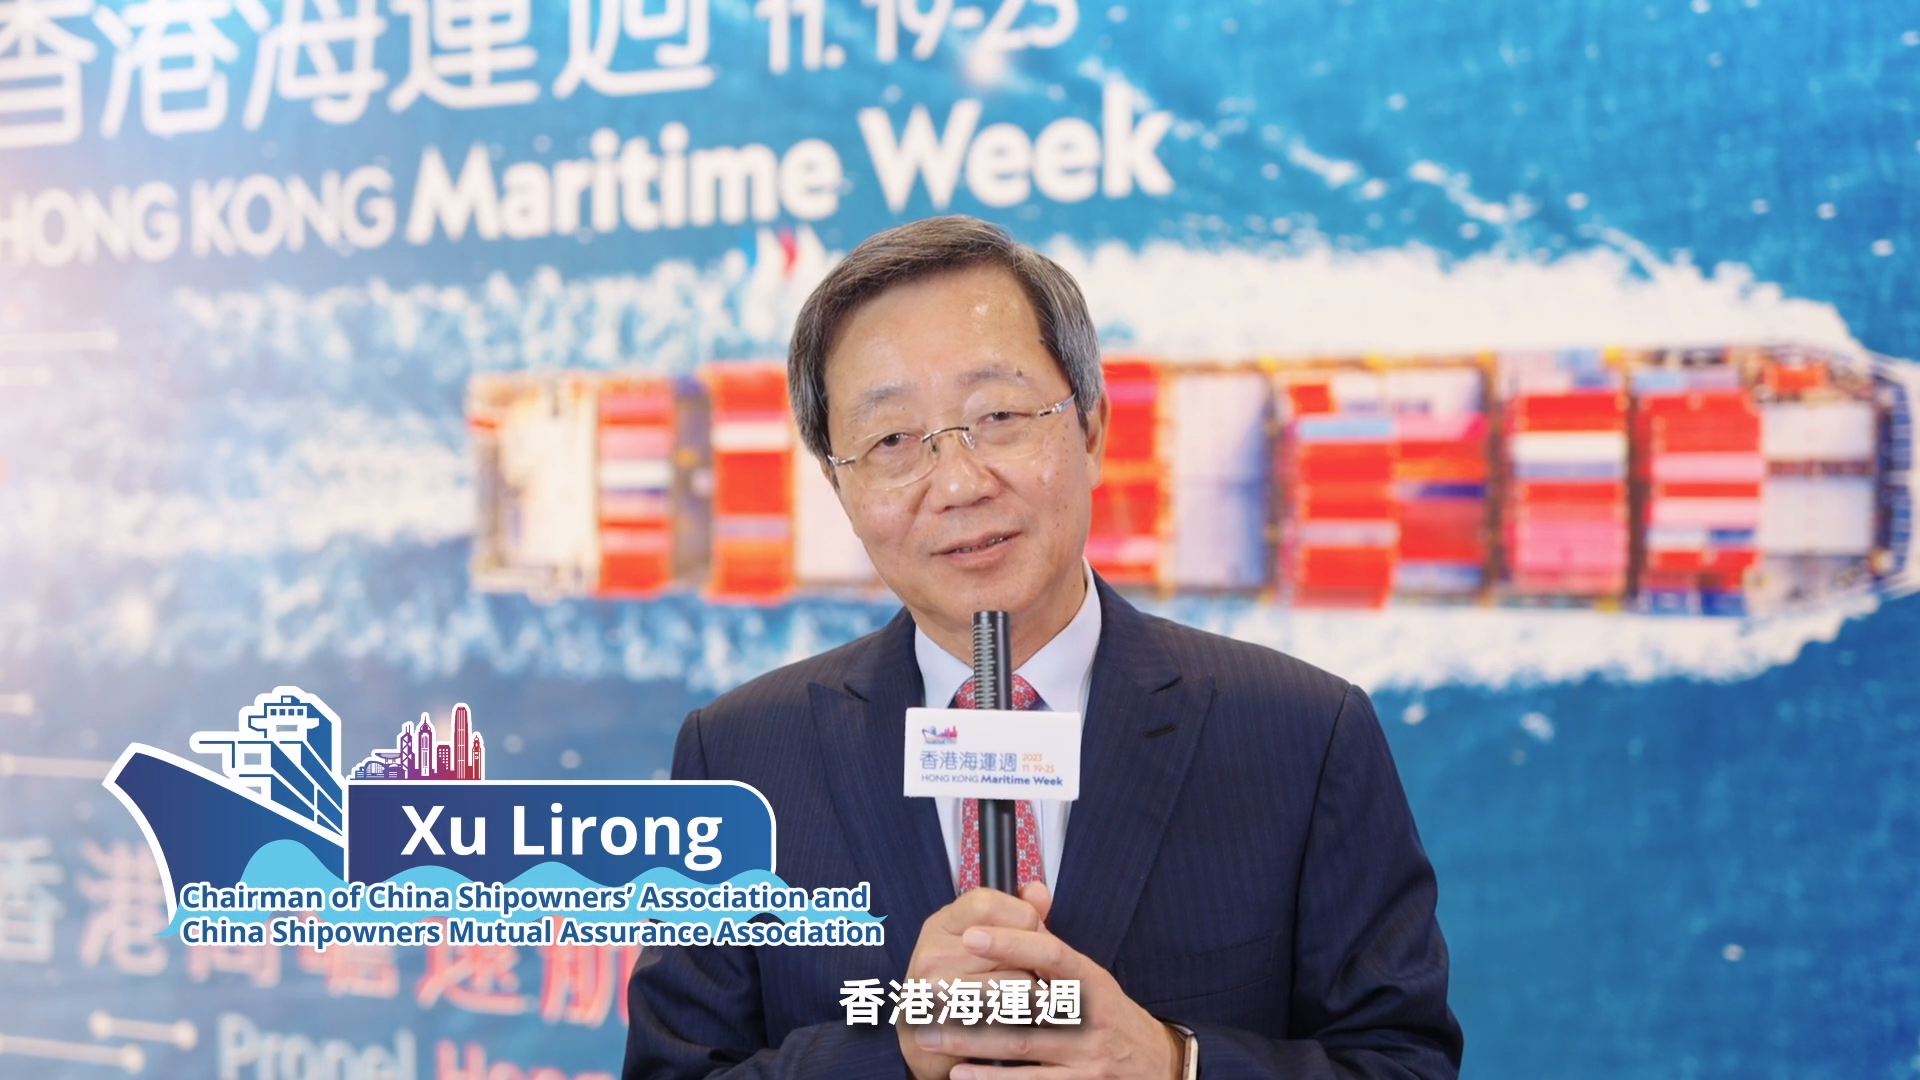 Hong Kong Maritime Week 2023 - Highlights from Captain Xu Lirong, Chairman of China Shipowners' Association and China Shipowners Mutual Assurance Association (Chinese Only)